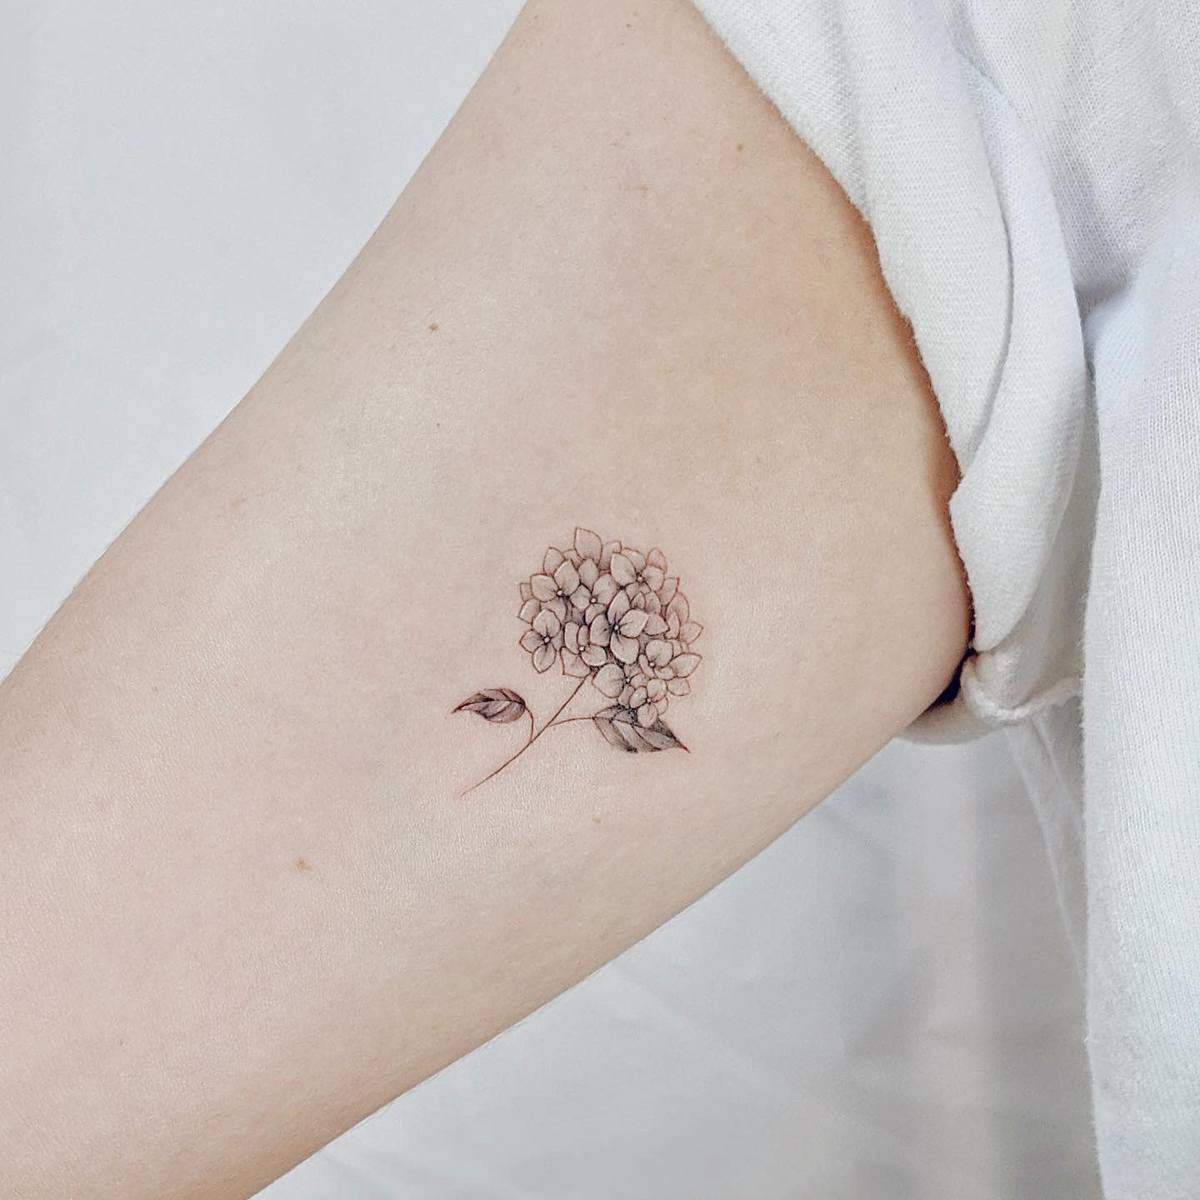 Watercolor hydrangea tattoo on the inner forearm